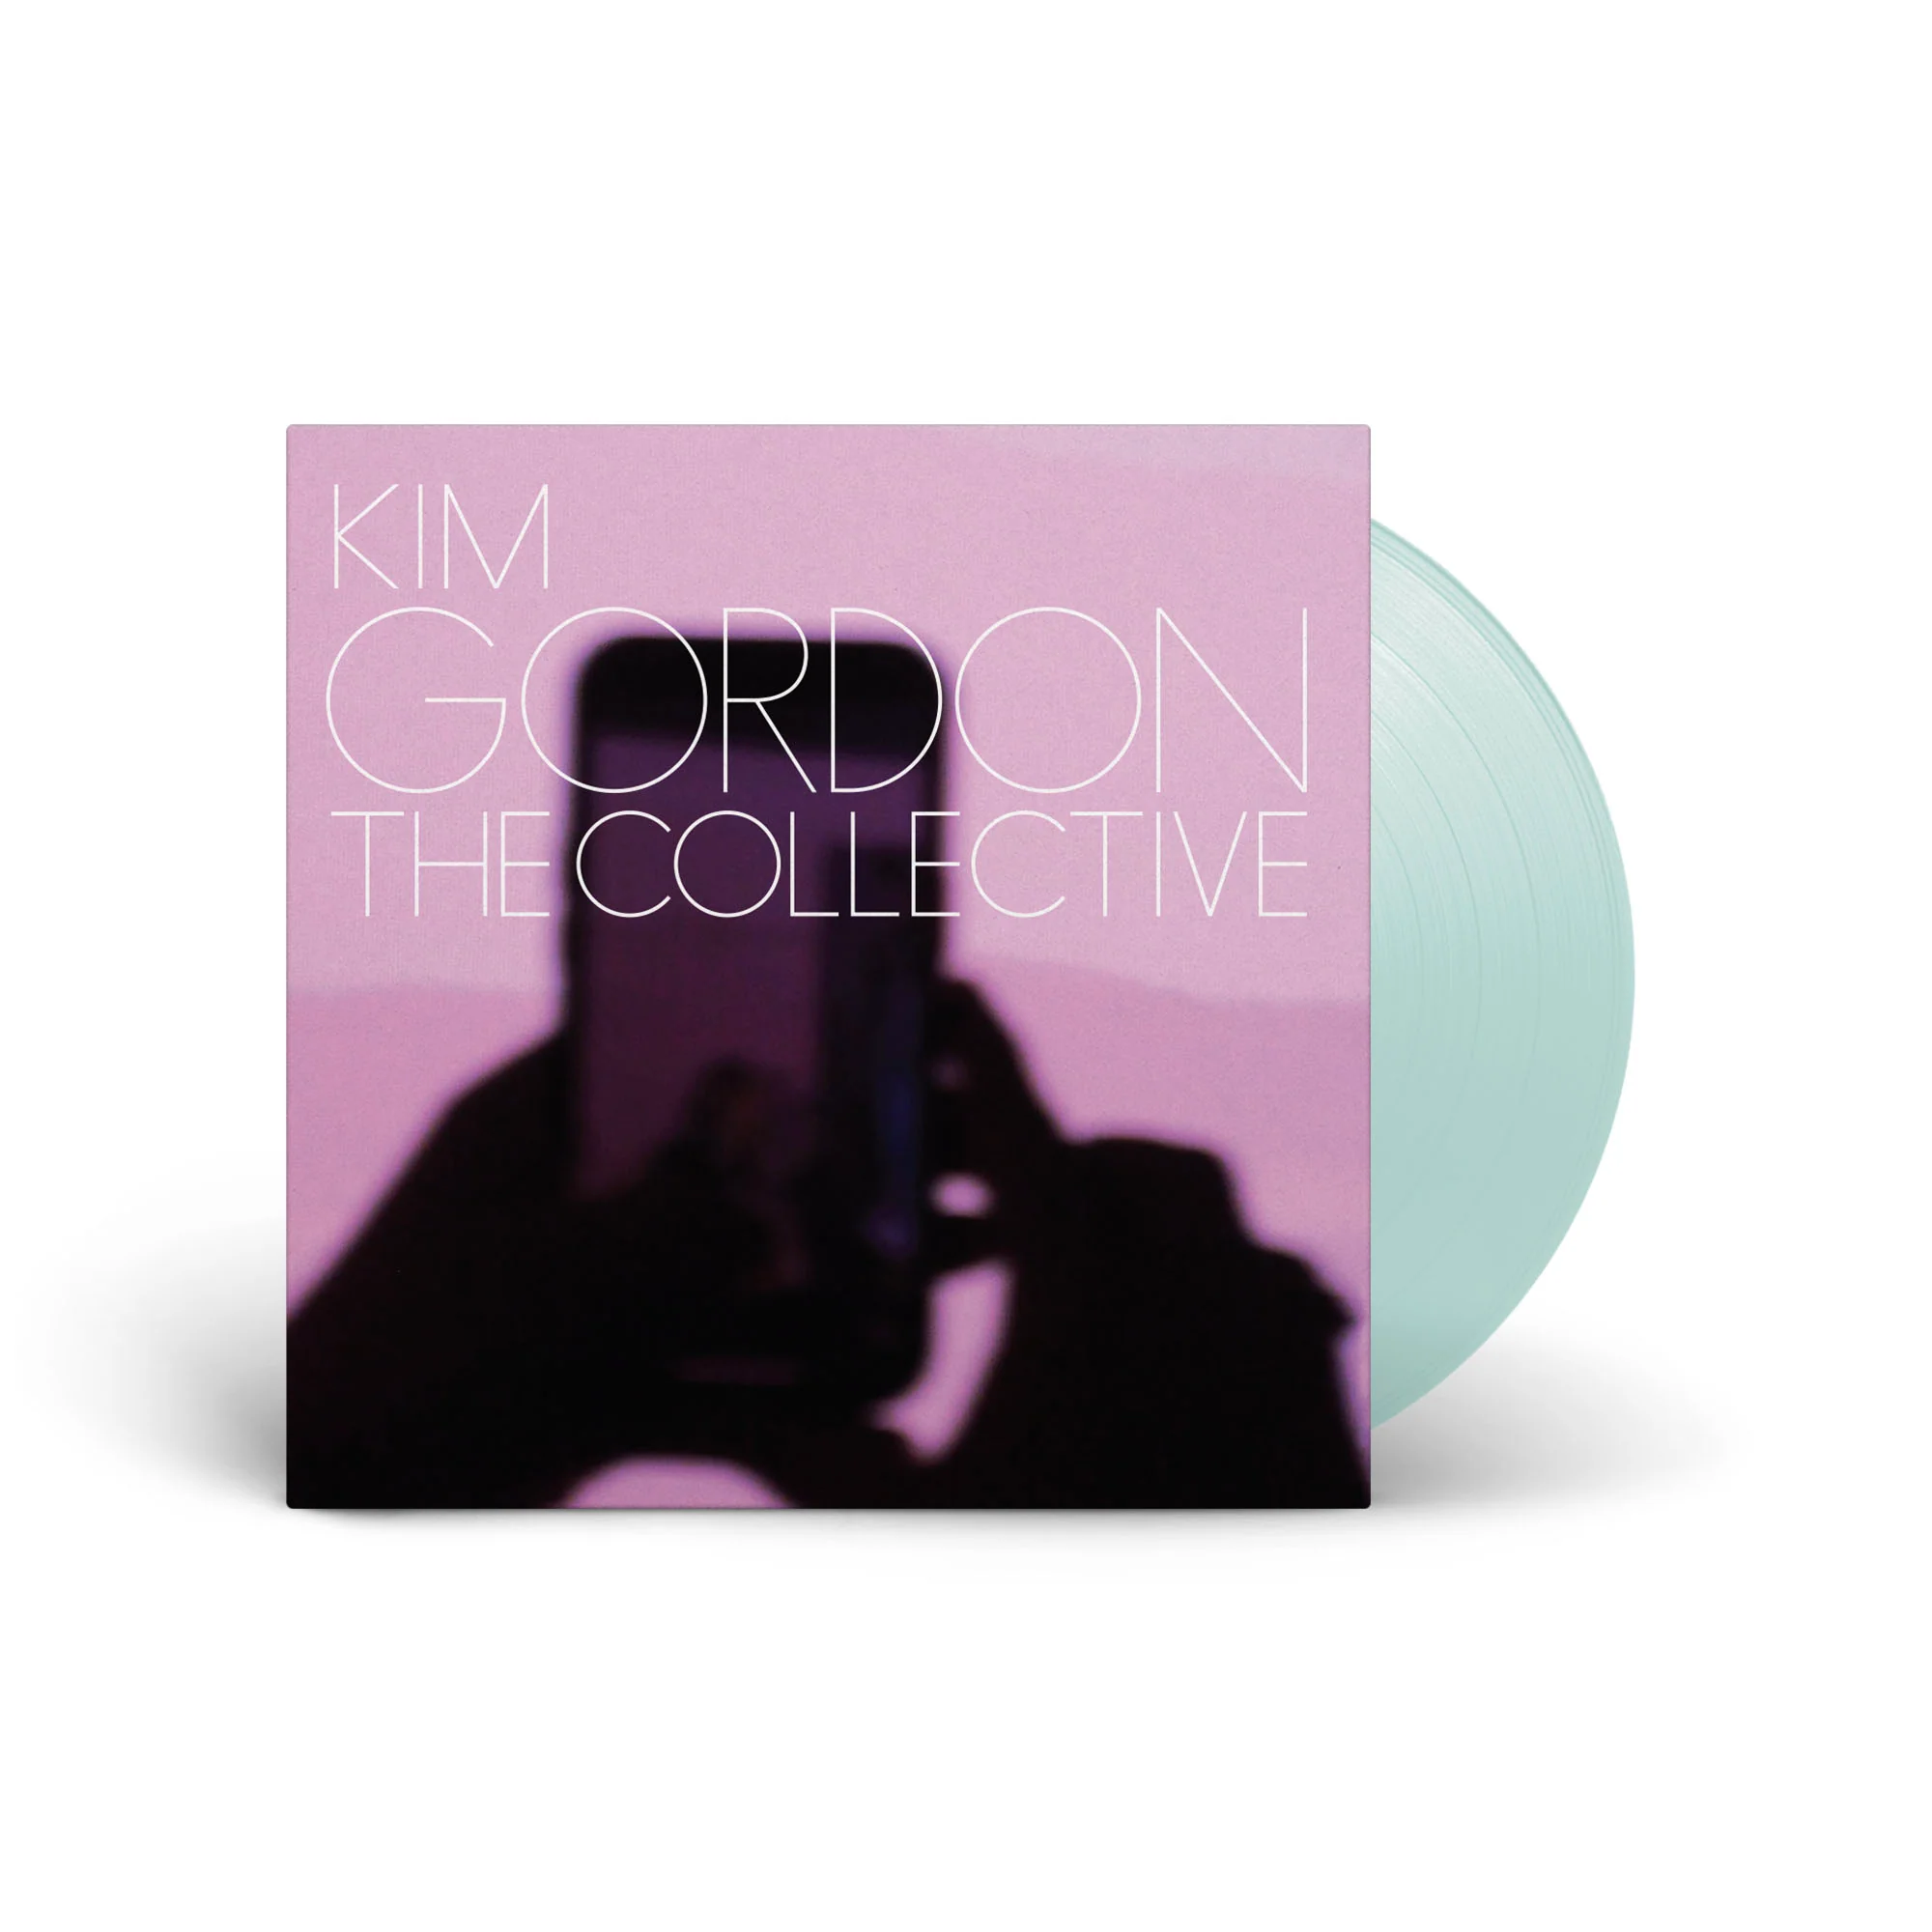 Kim Gordon "The Collective" Limited LP